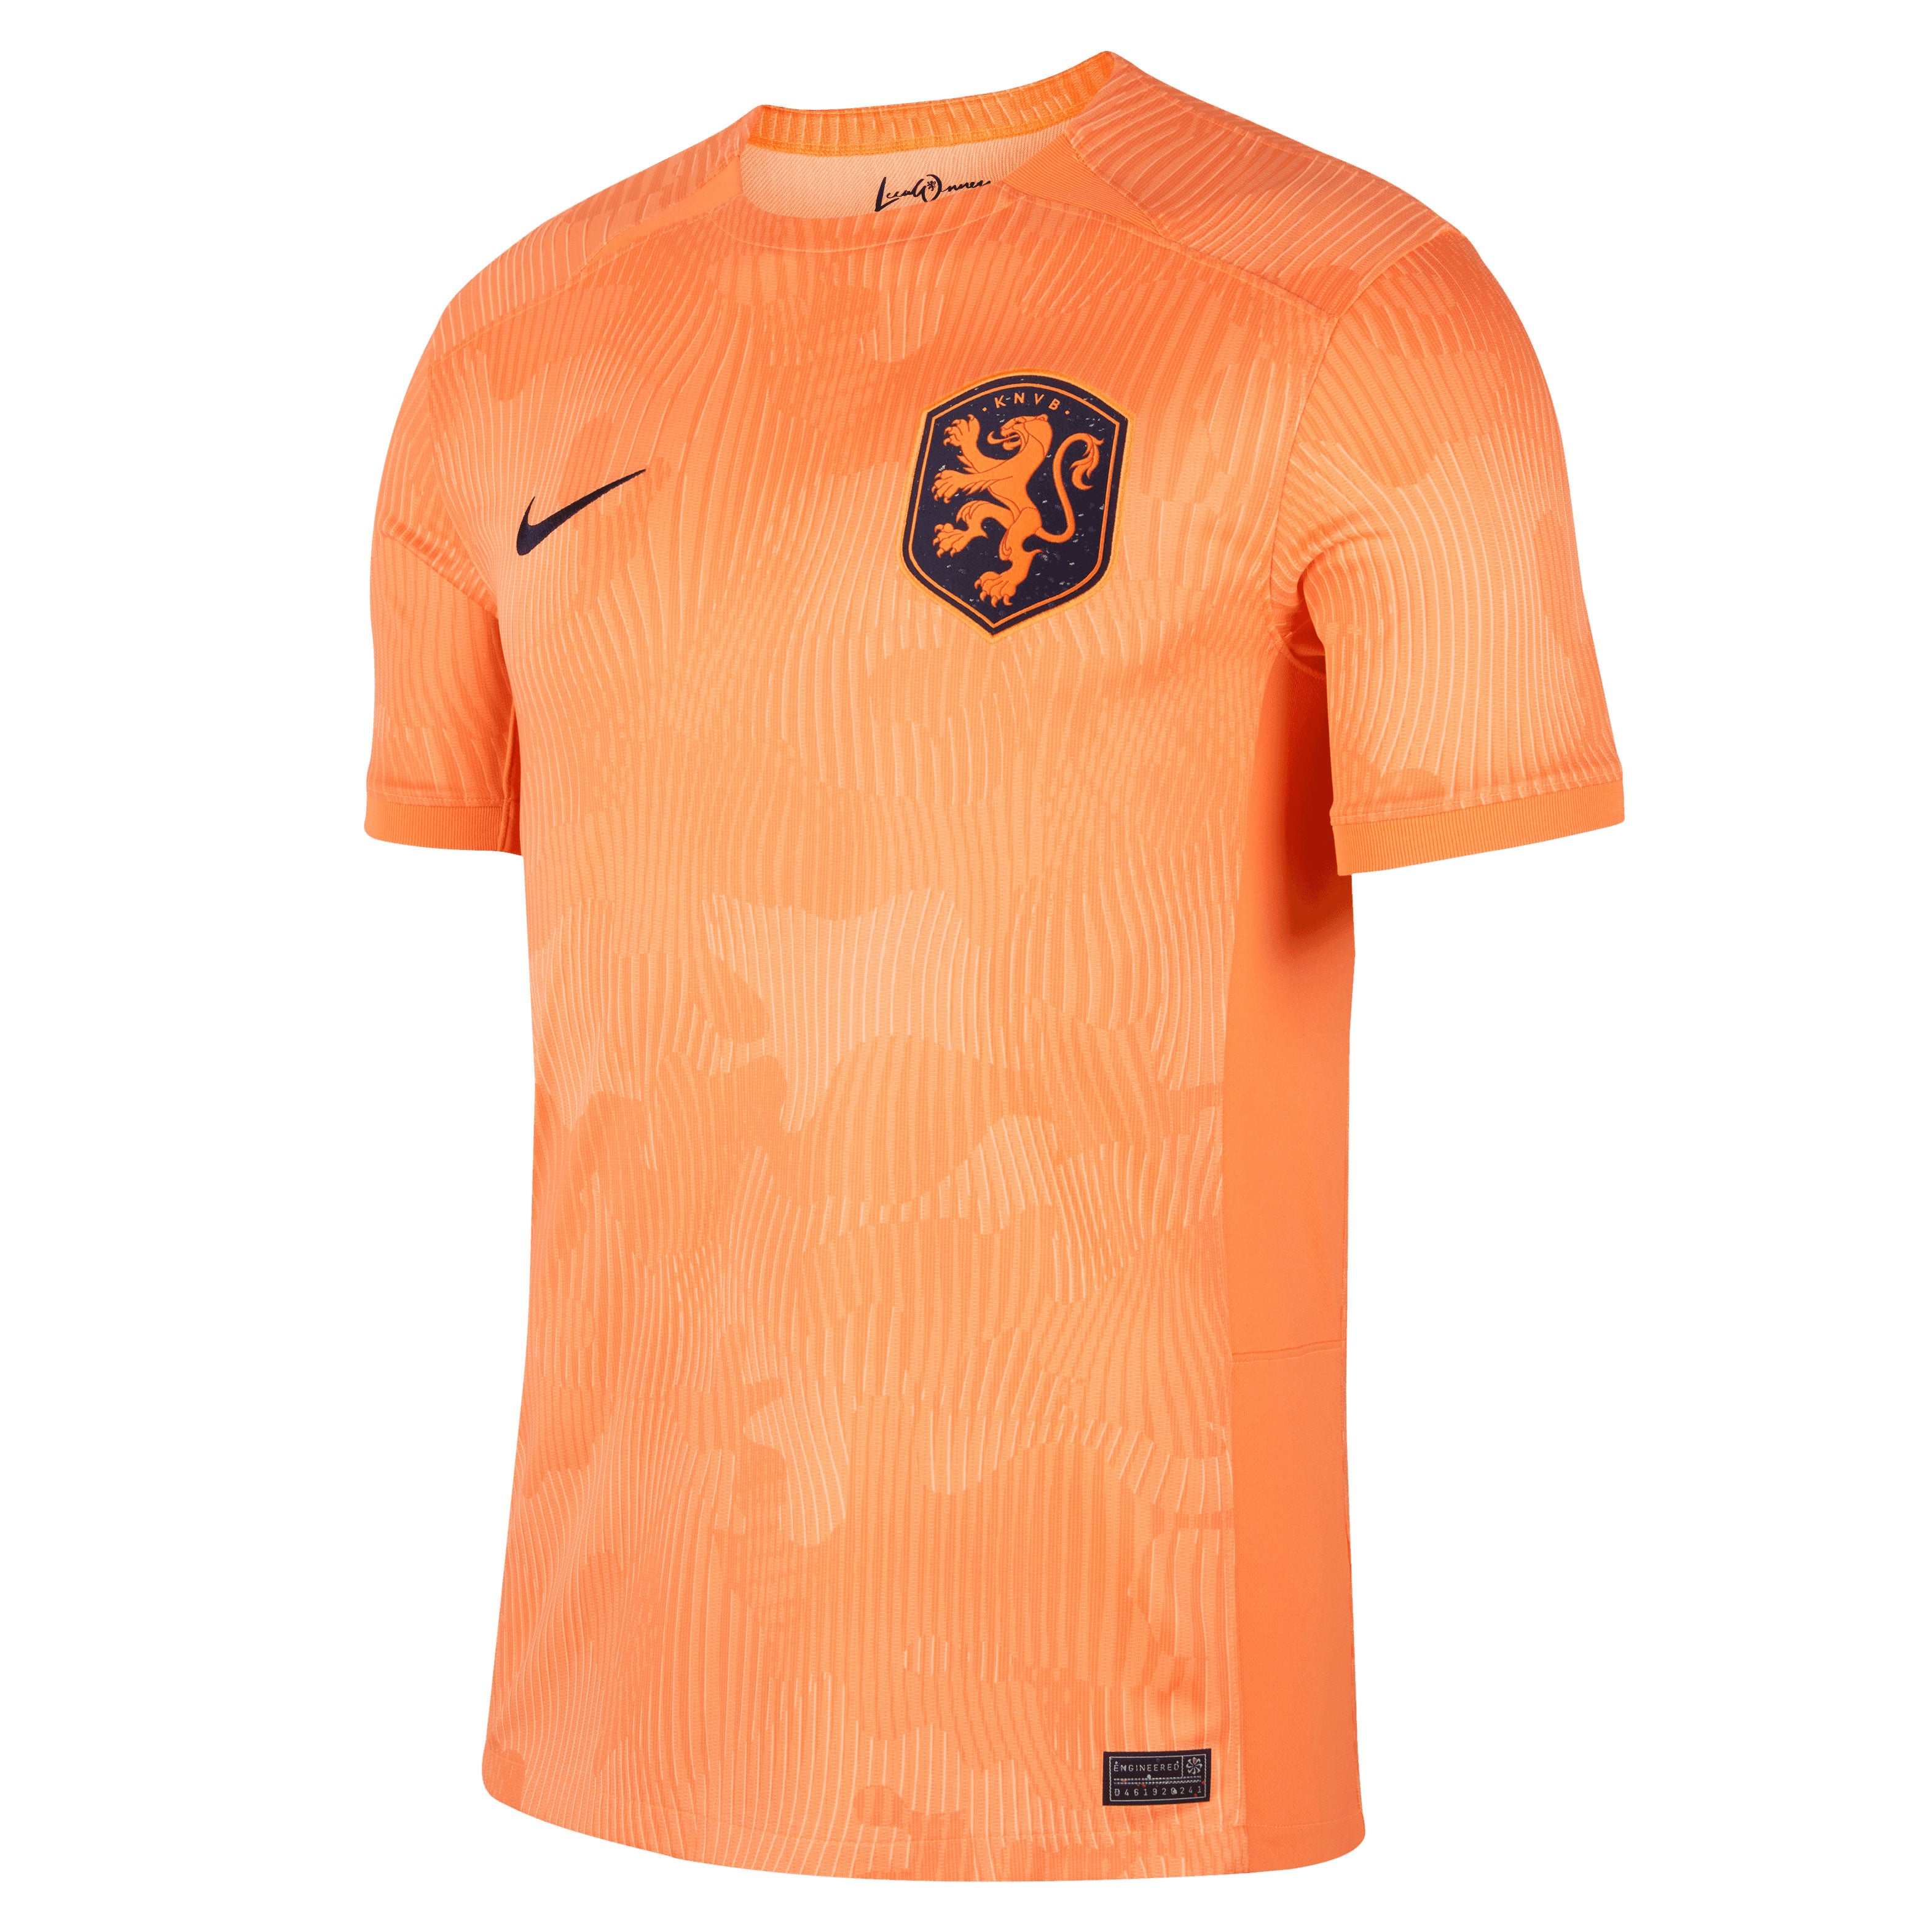 orange and black soccer jersey